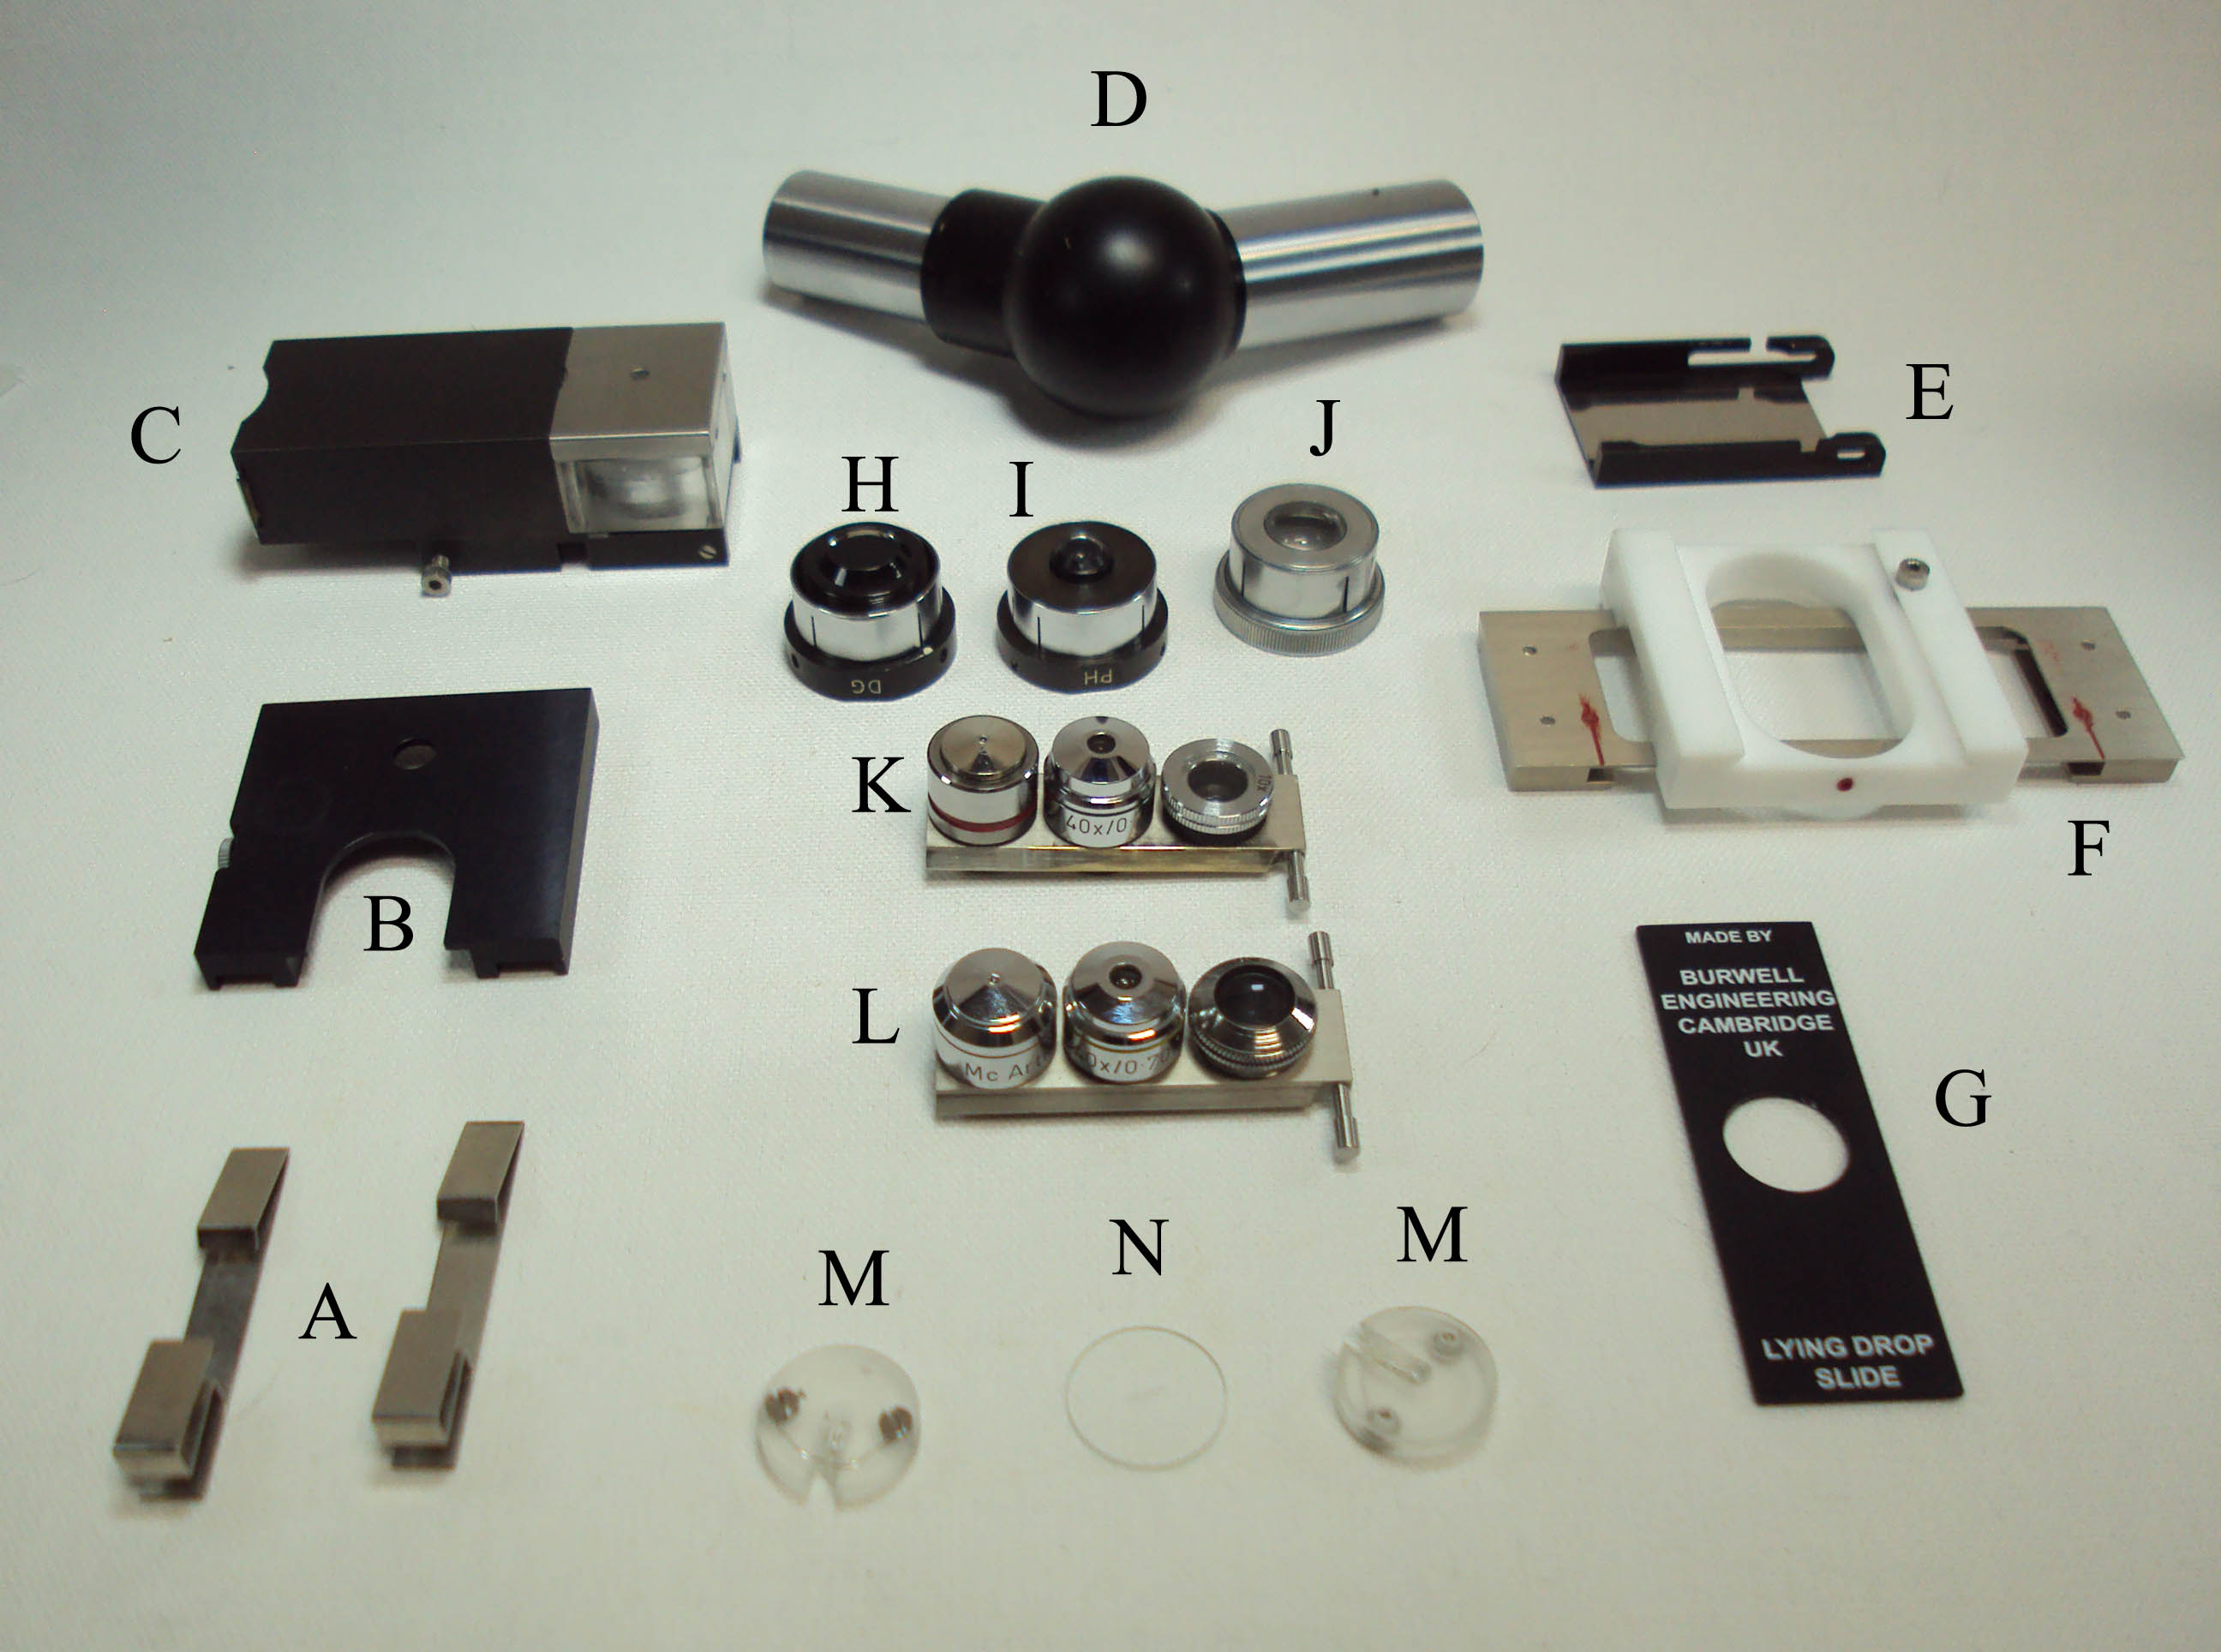 Kirk-McArthur accessories